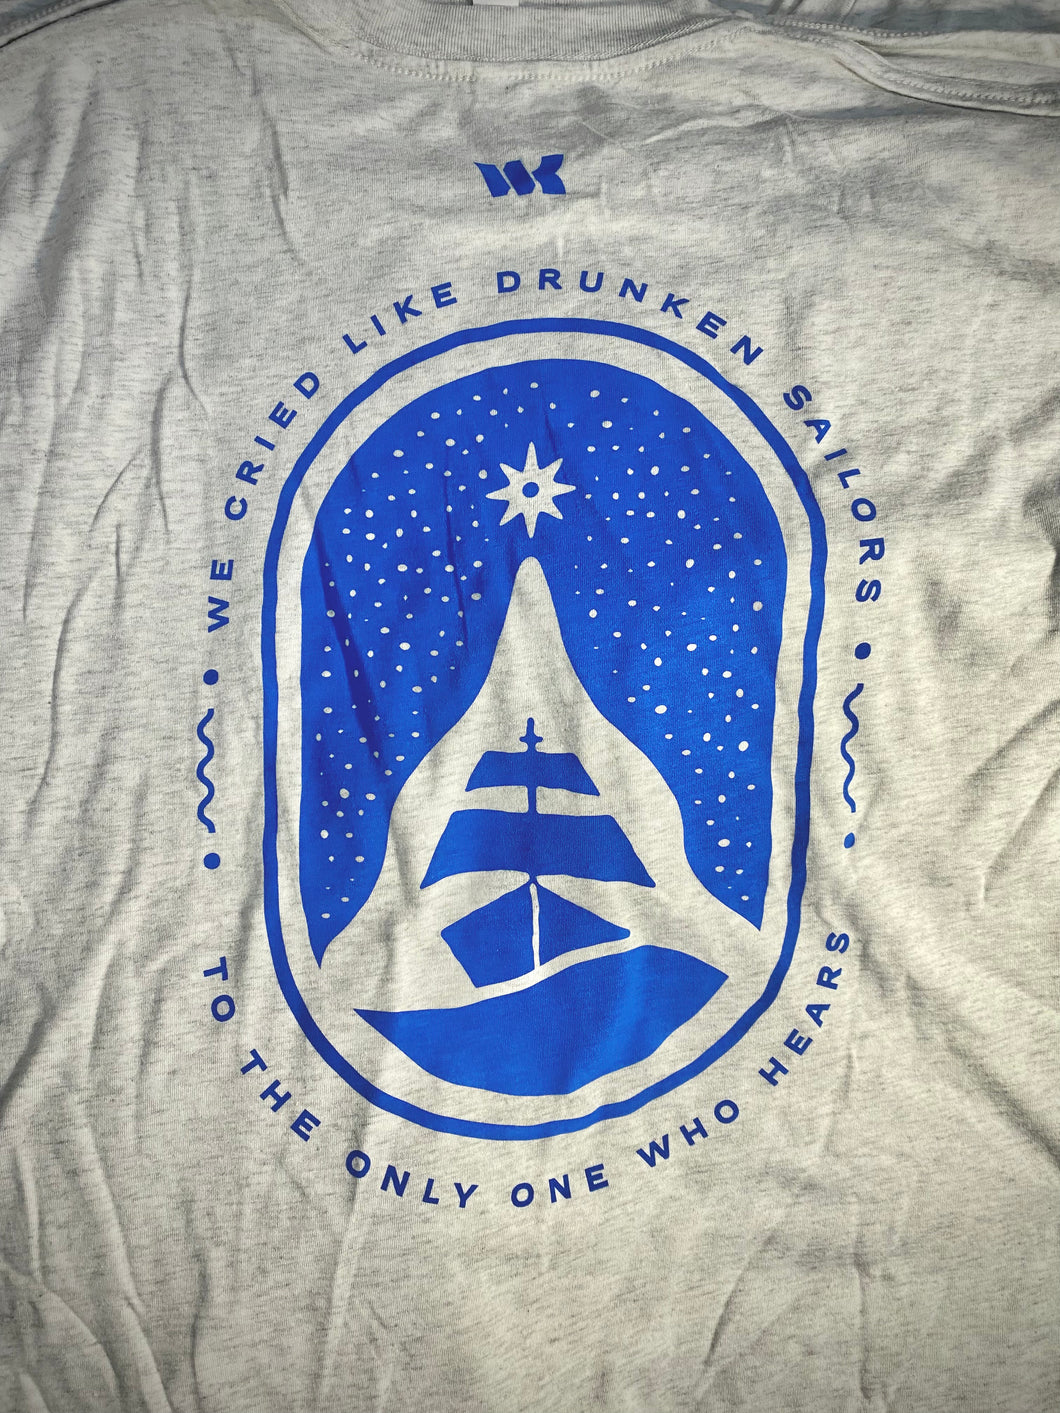 We Cried Like Drunken Sailors - Patreon Exclusive T-shirt